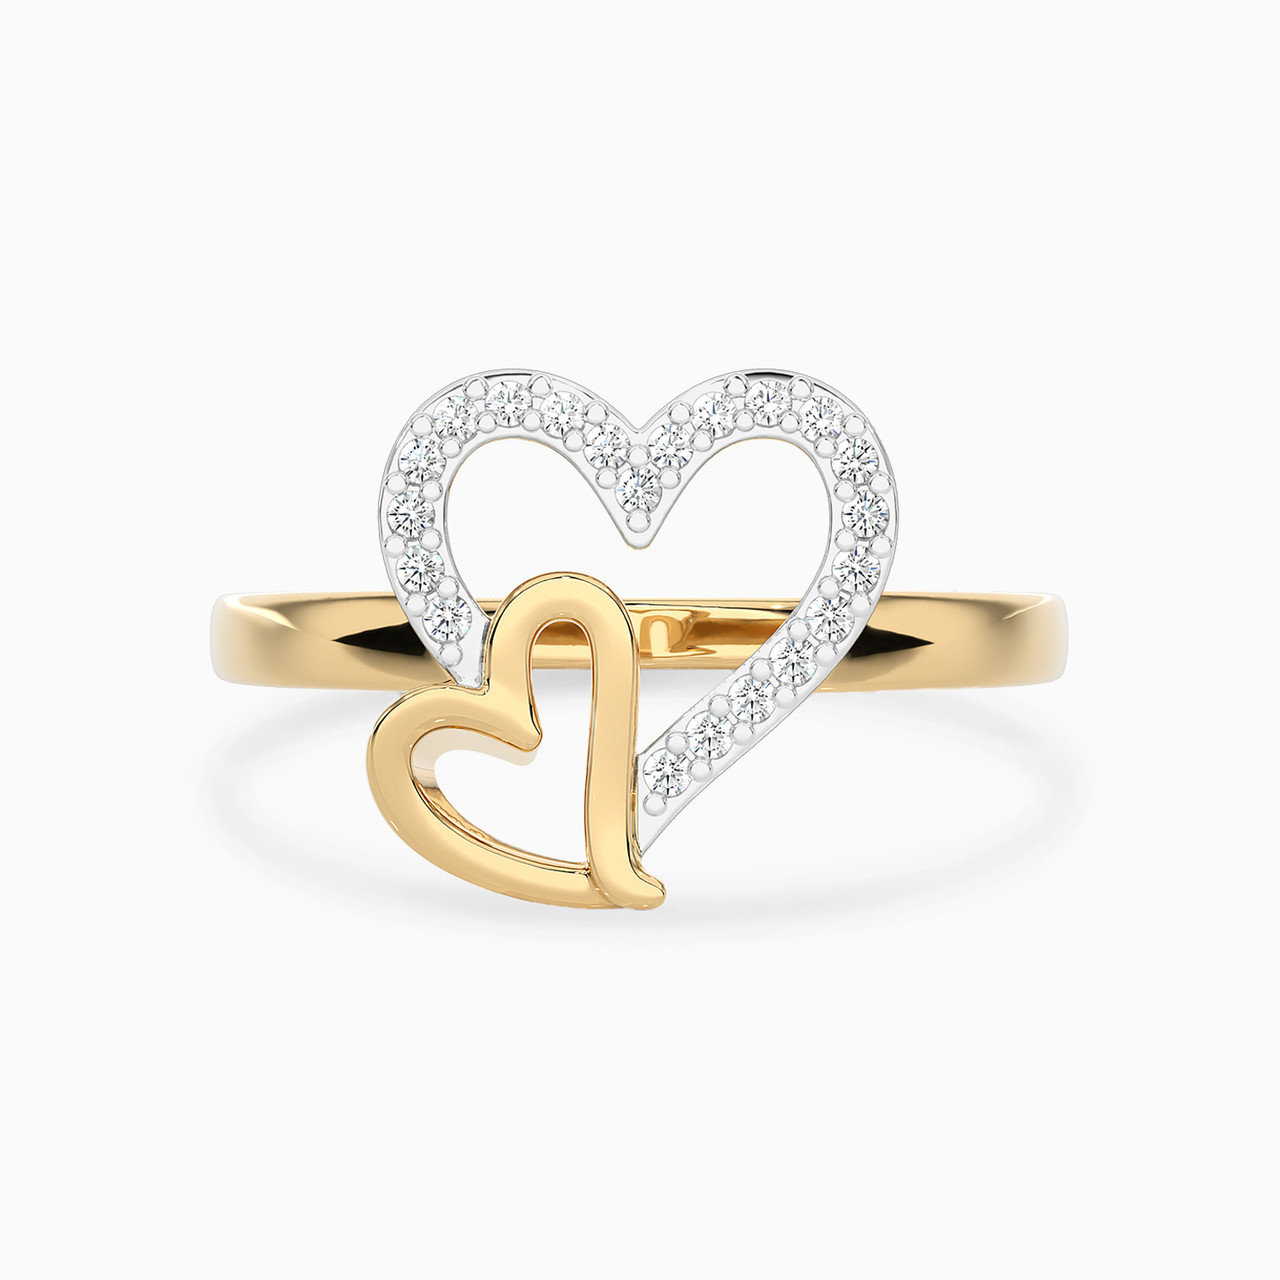 18K Gold Diamond Statement Ring